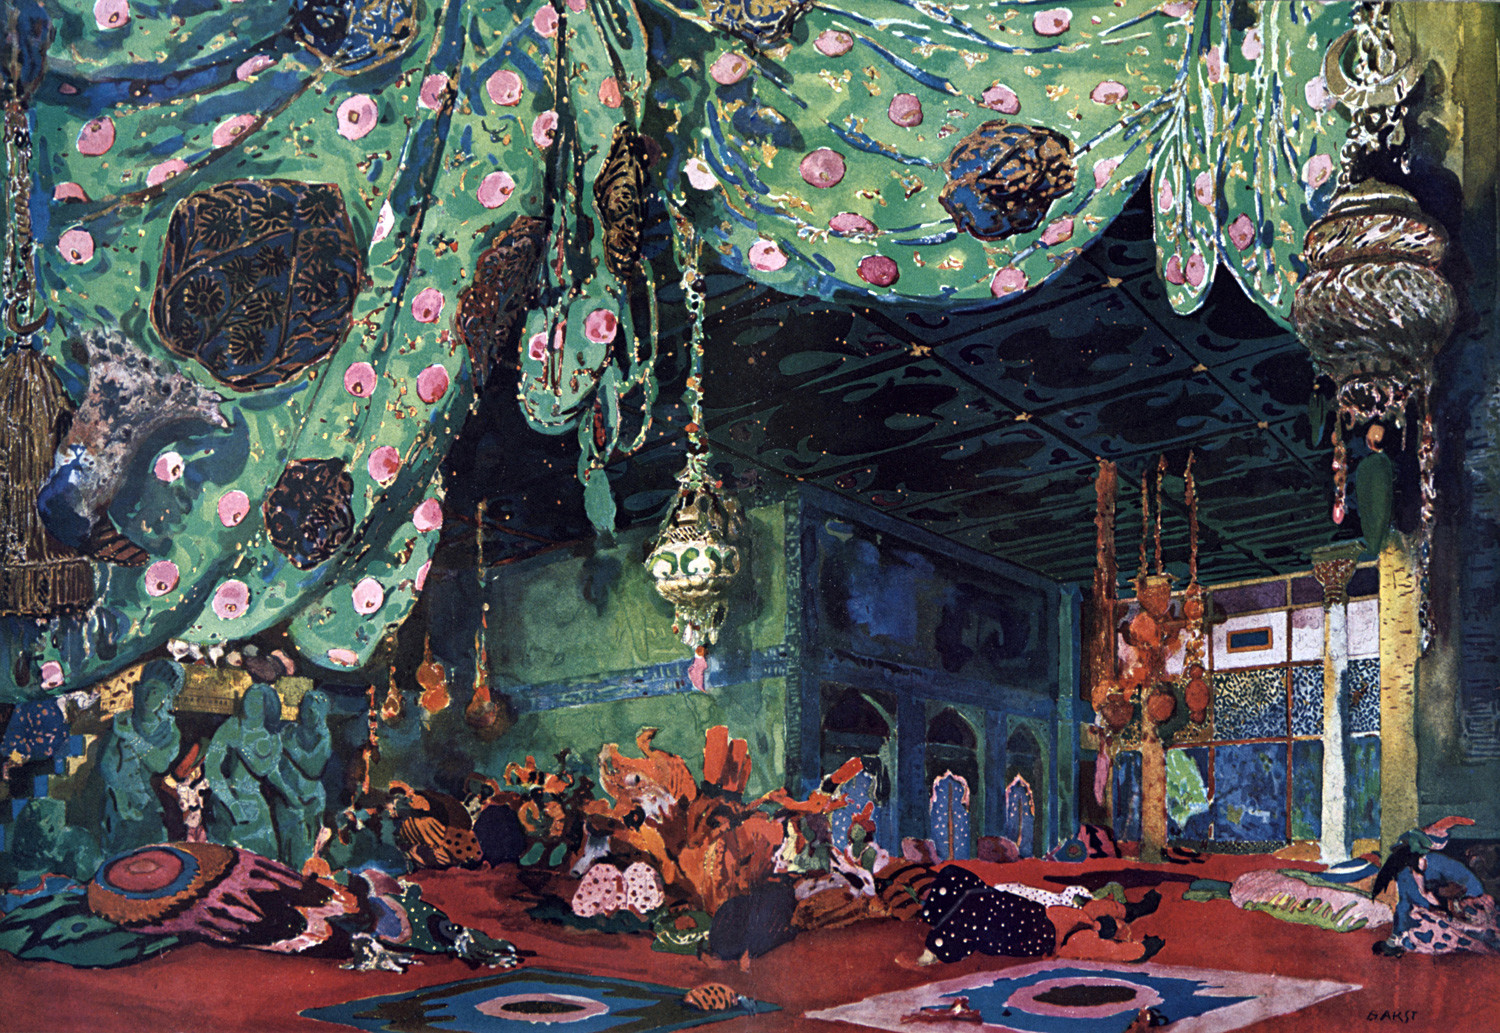 Scenery design by Leon Bakst (1866-1924) 'Scheherazade' produced in 1910 by Sergei Diaghilev's Ballets Russes. Music by Nikolai Rimsky-Korsakov, choreography by Michel Fokine.